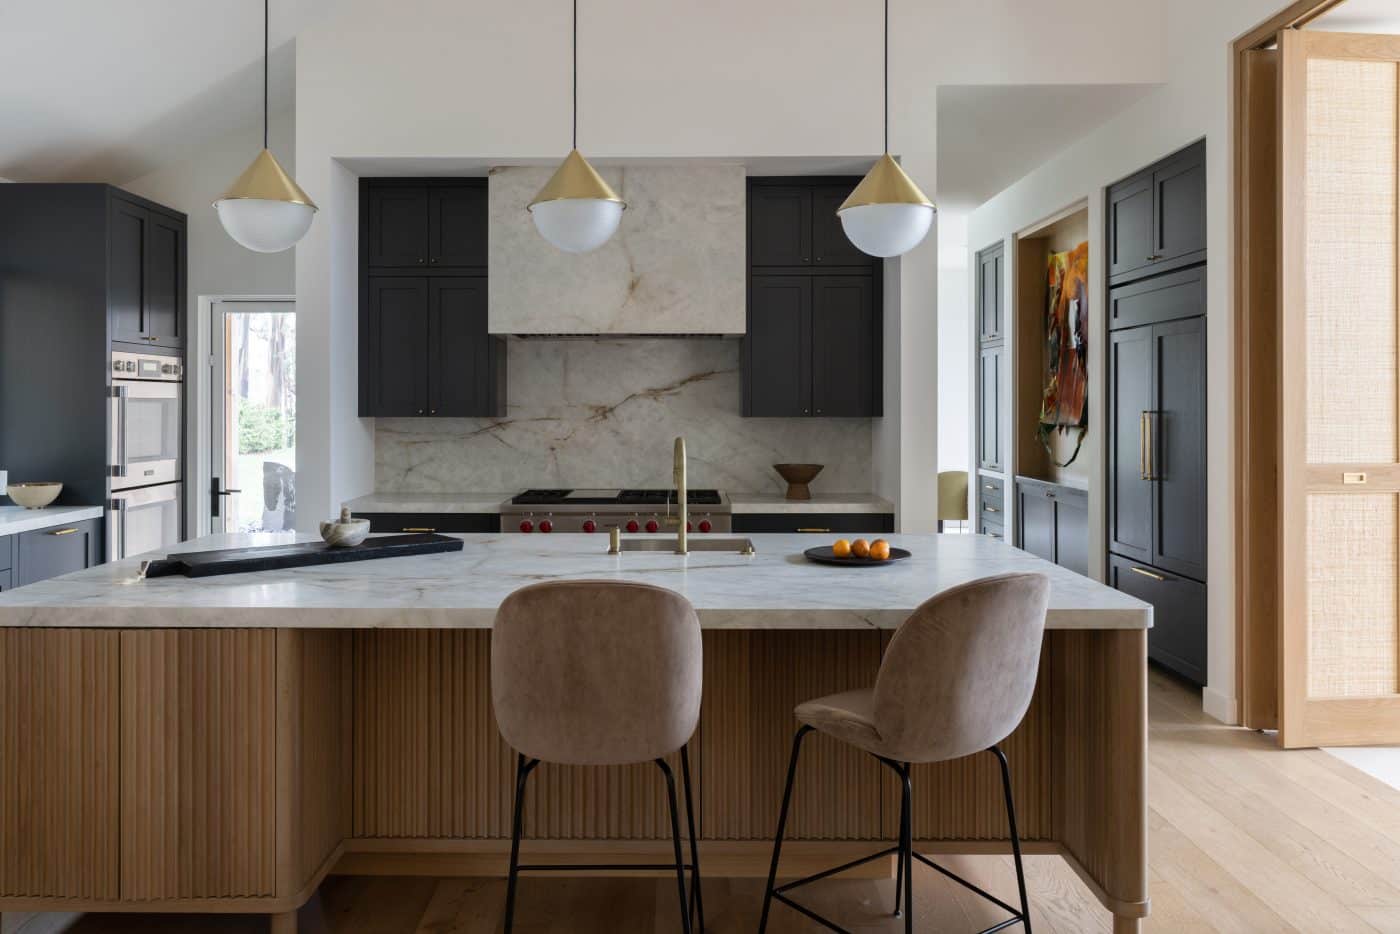 Kitchen of Hillsborough home in San Francisco suburbs designed by interior designer Michael HIlal